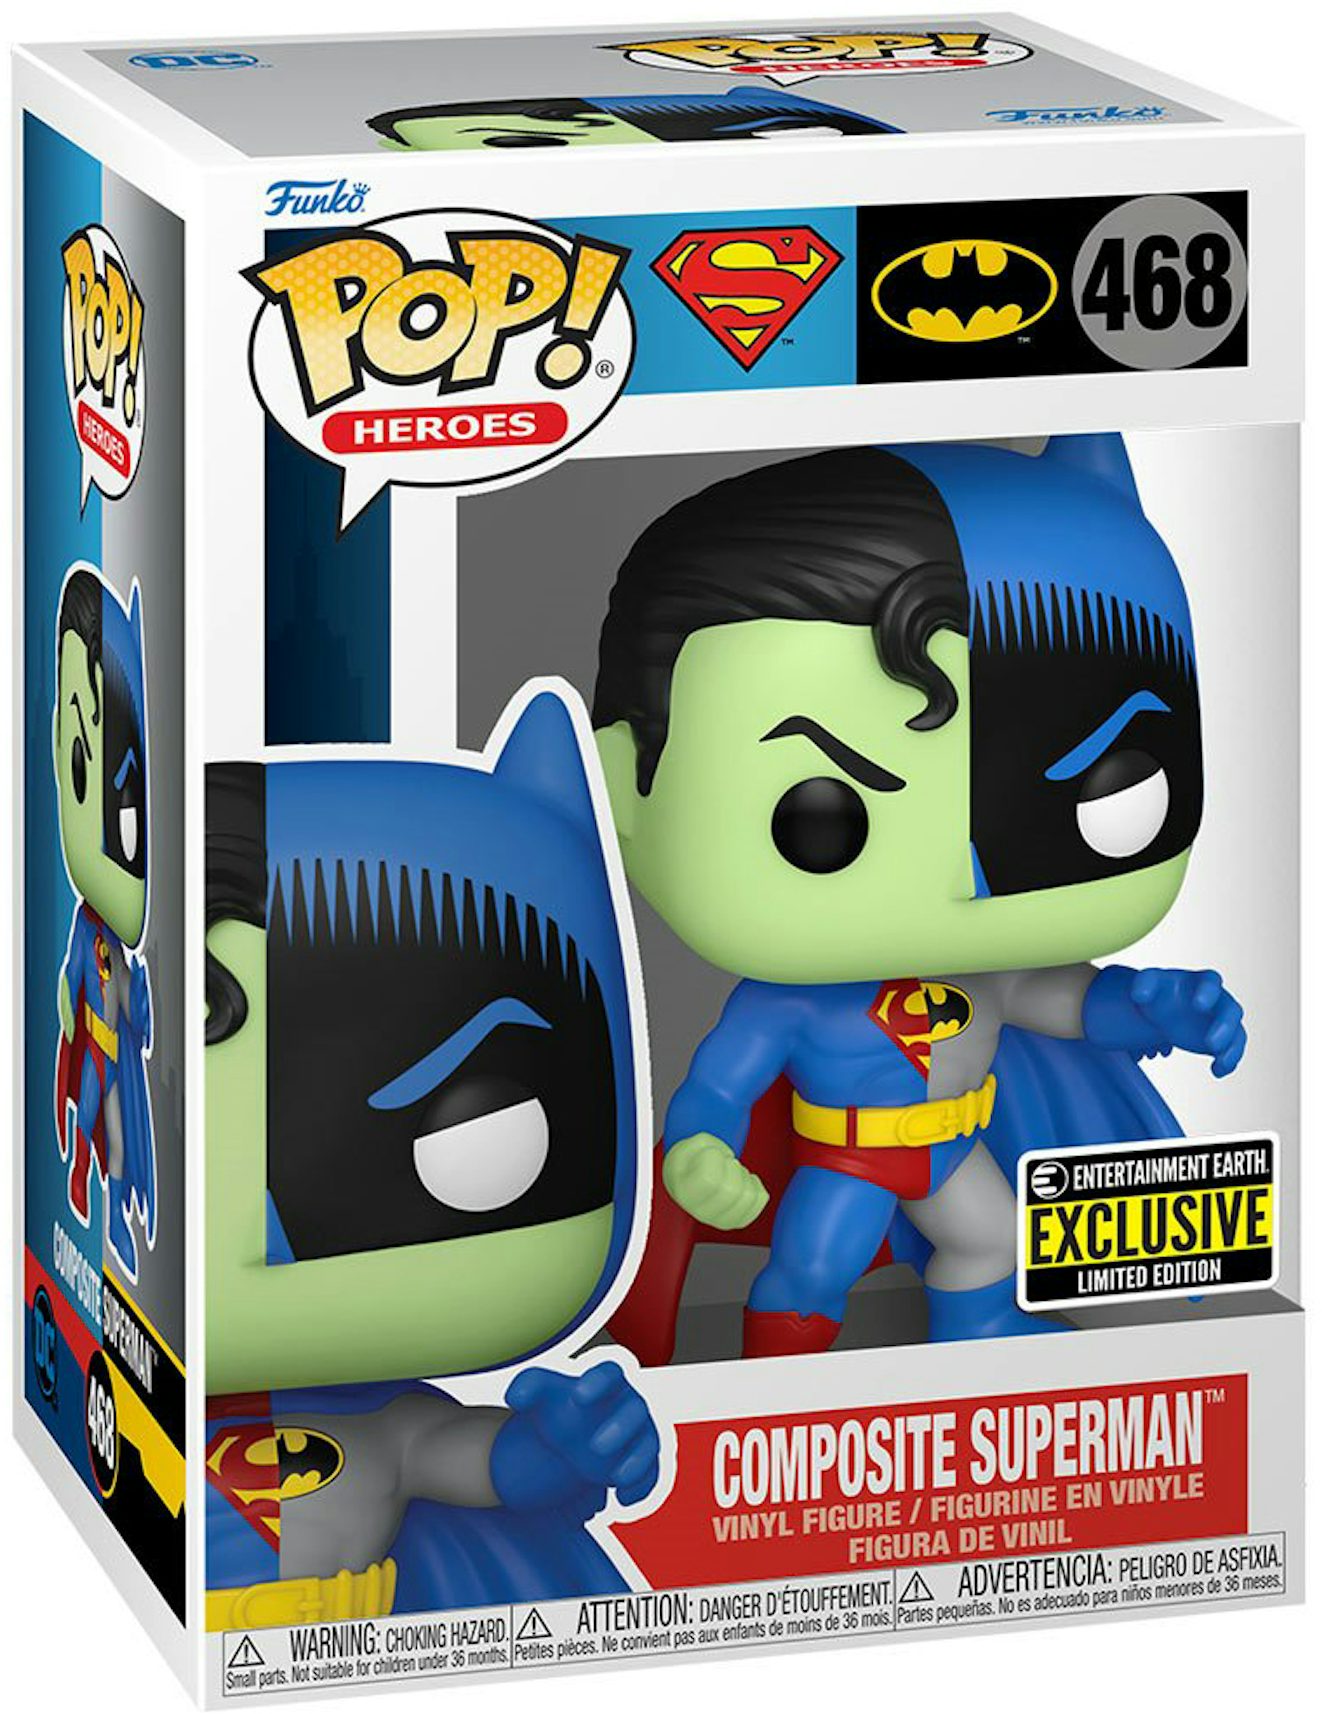 Figurine Superman DC Hush 18 cm - Figurine de collection - Achat